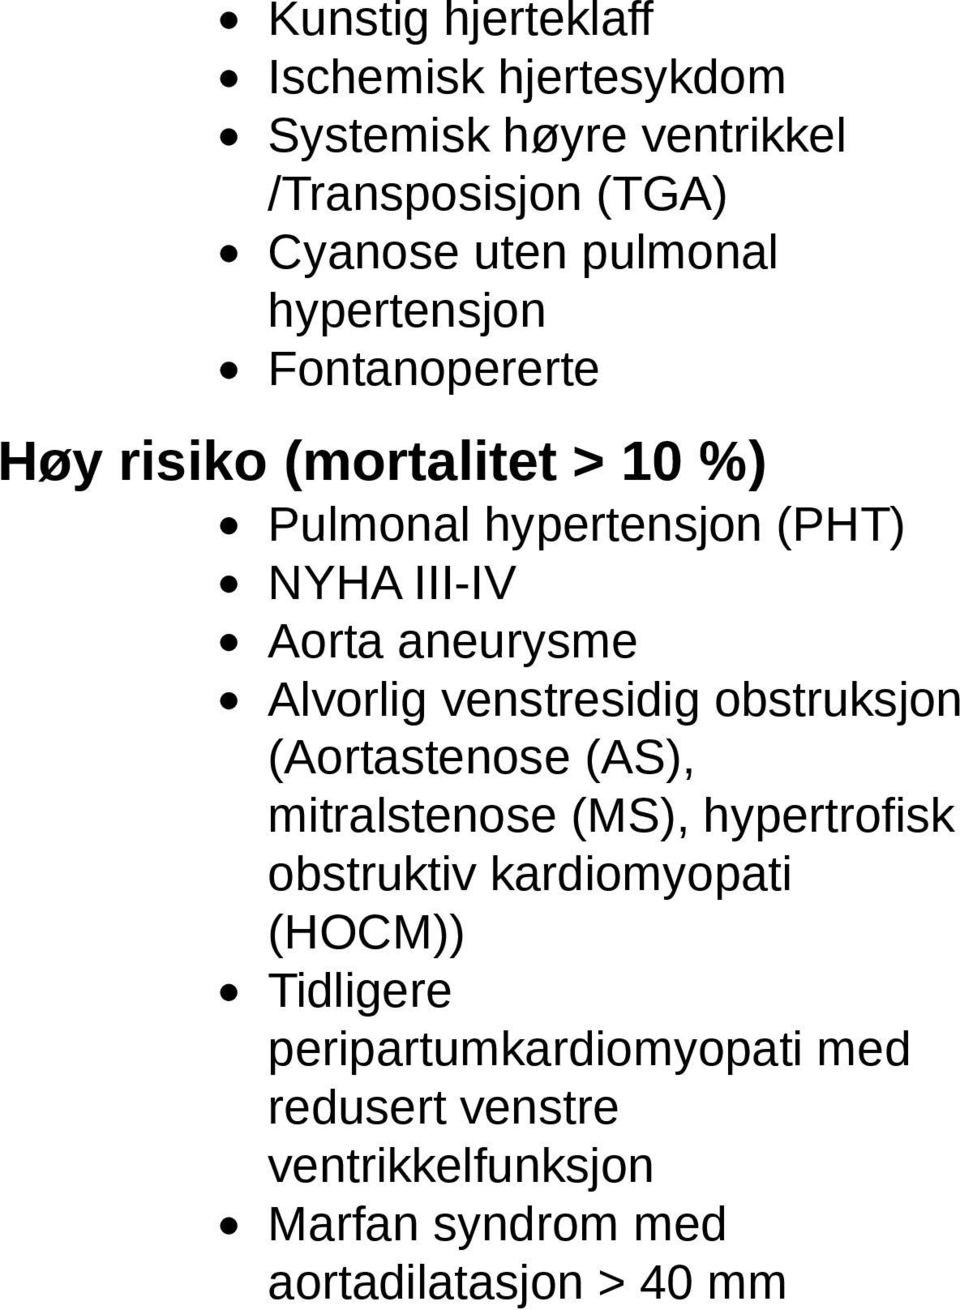 Alvorlig venstresidig obstruksjon (Aortastenose (AS), mitralstenose (MS), hypertrofisk obstruktiv kardiomyopati